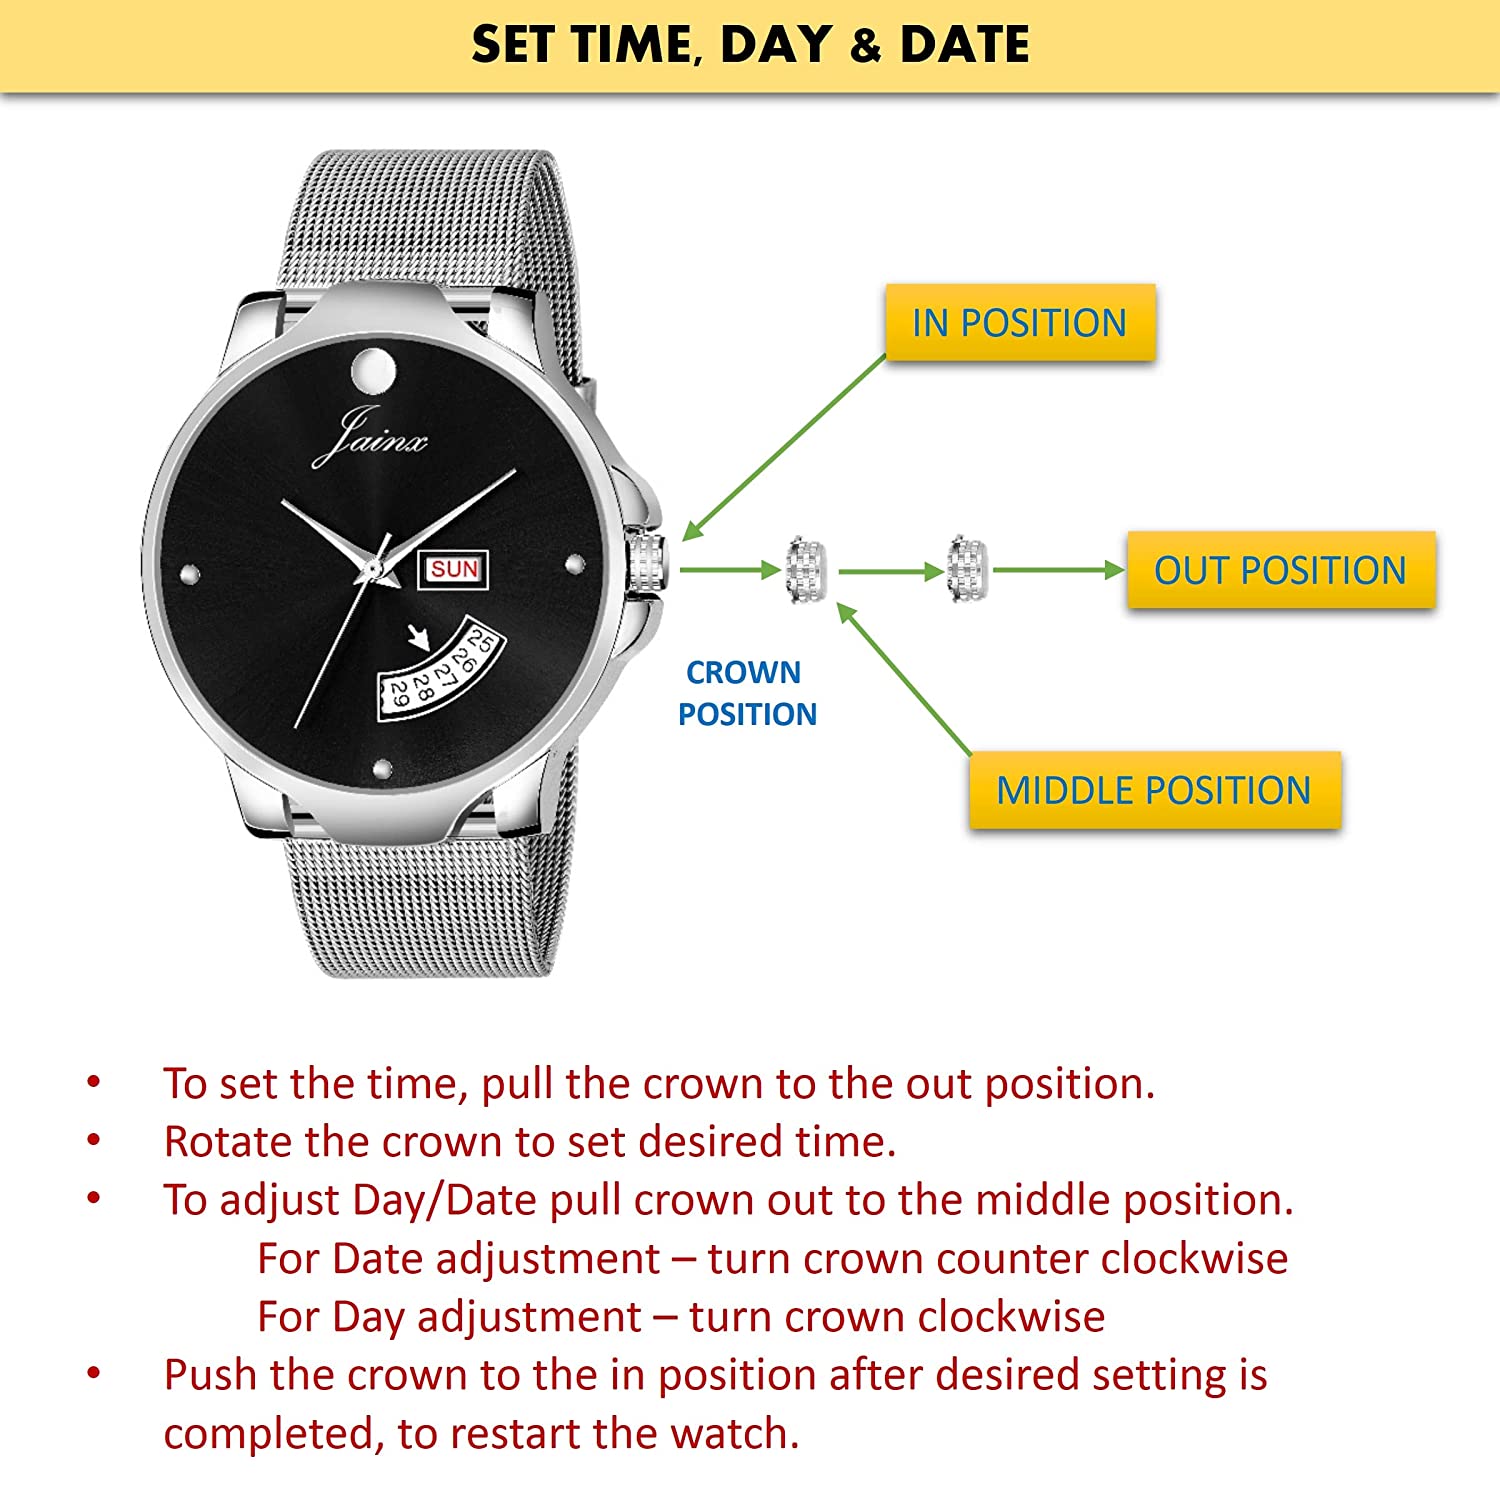 Black Day & Date Steel Mesh Chain Analog Watch - For Men JM7118 - Jainx Store